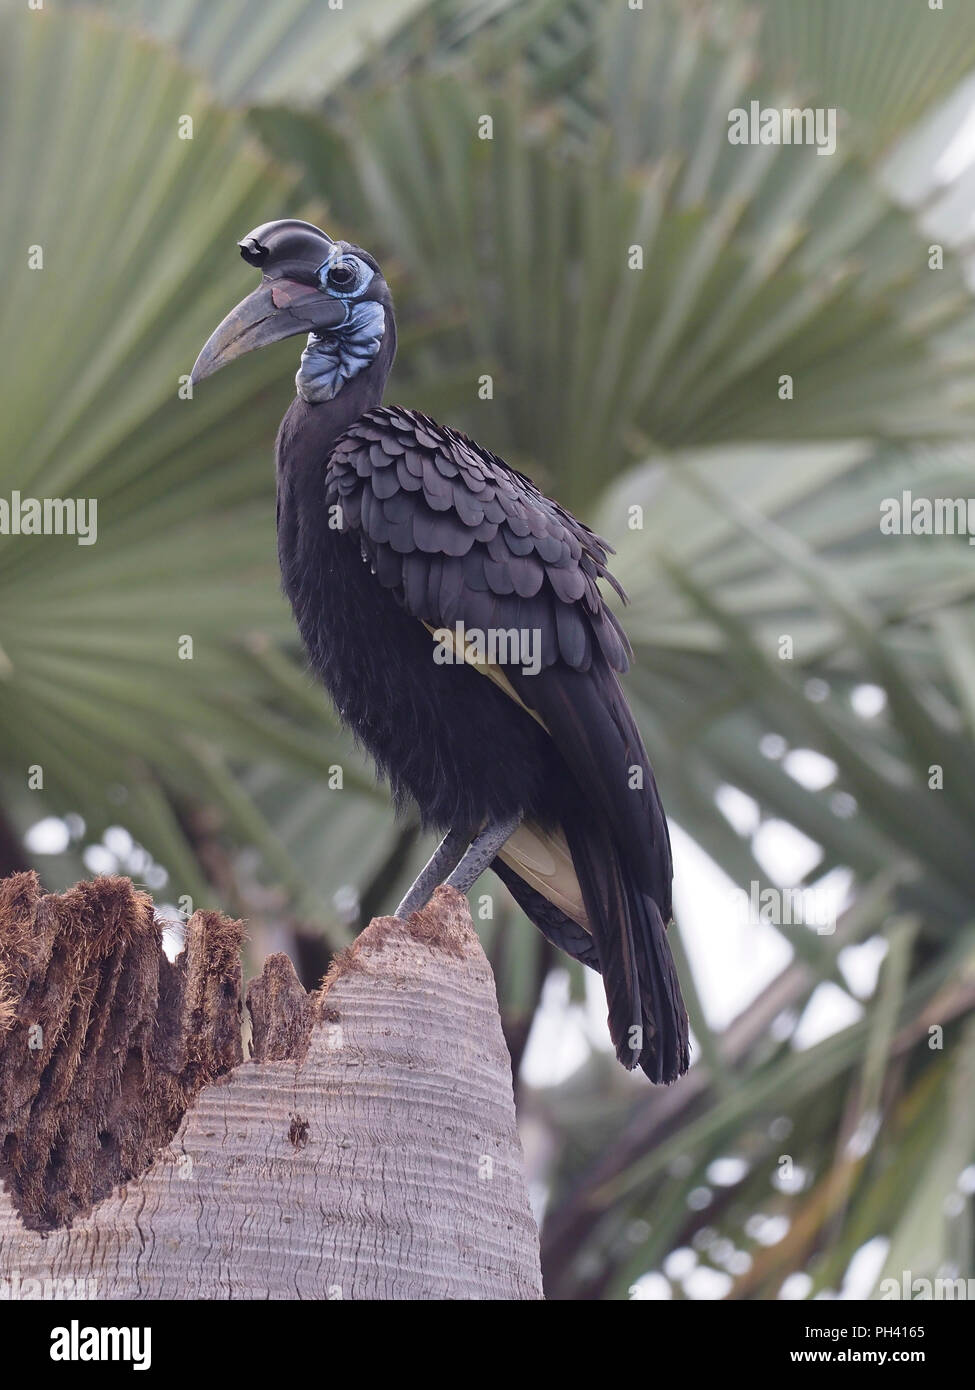 Black-casqued hornbill, Ceratogymna atrata, seul oiseau sur la branche, de l'Ouganda, août 2018 Banque D'Images